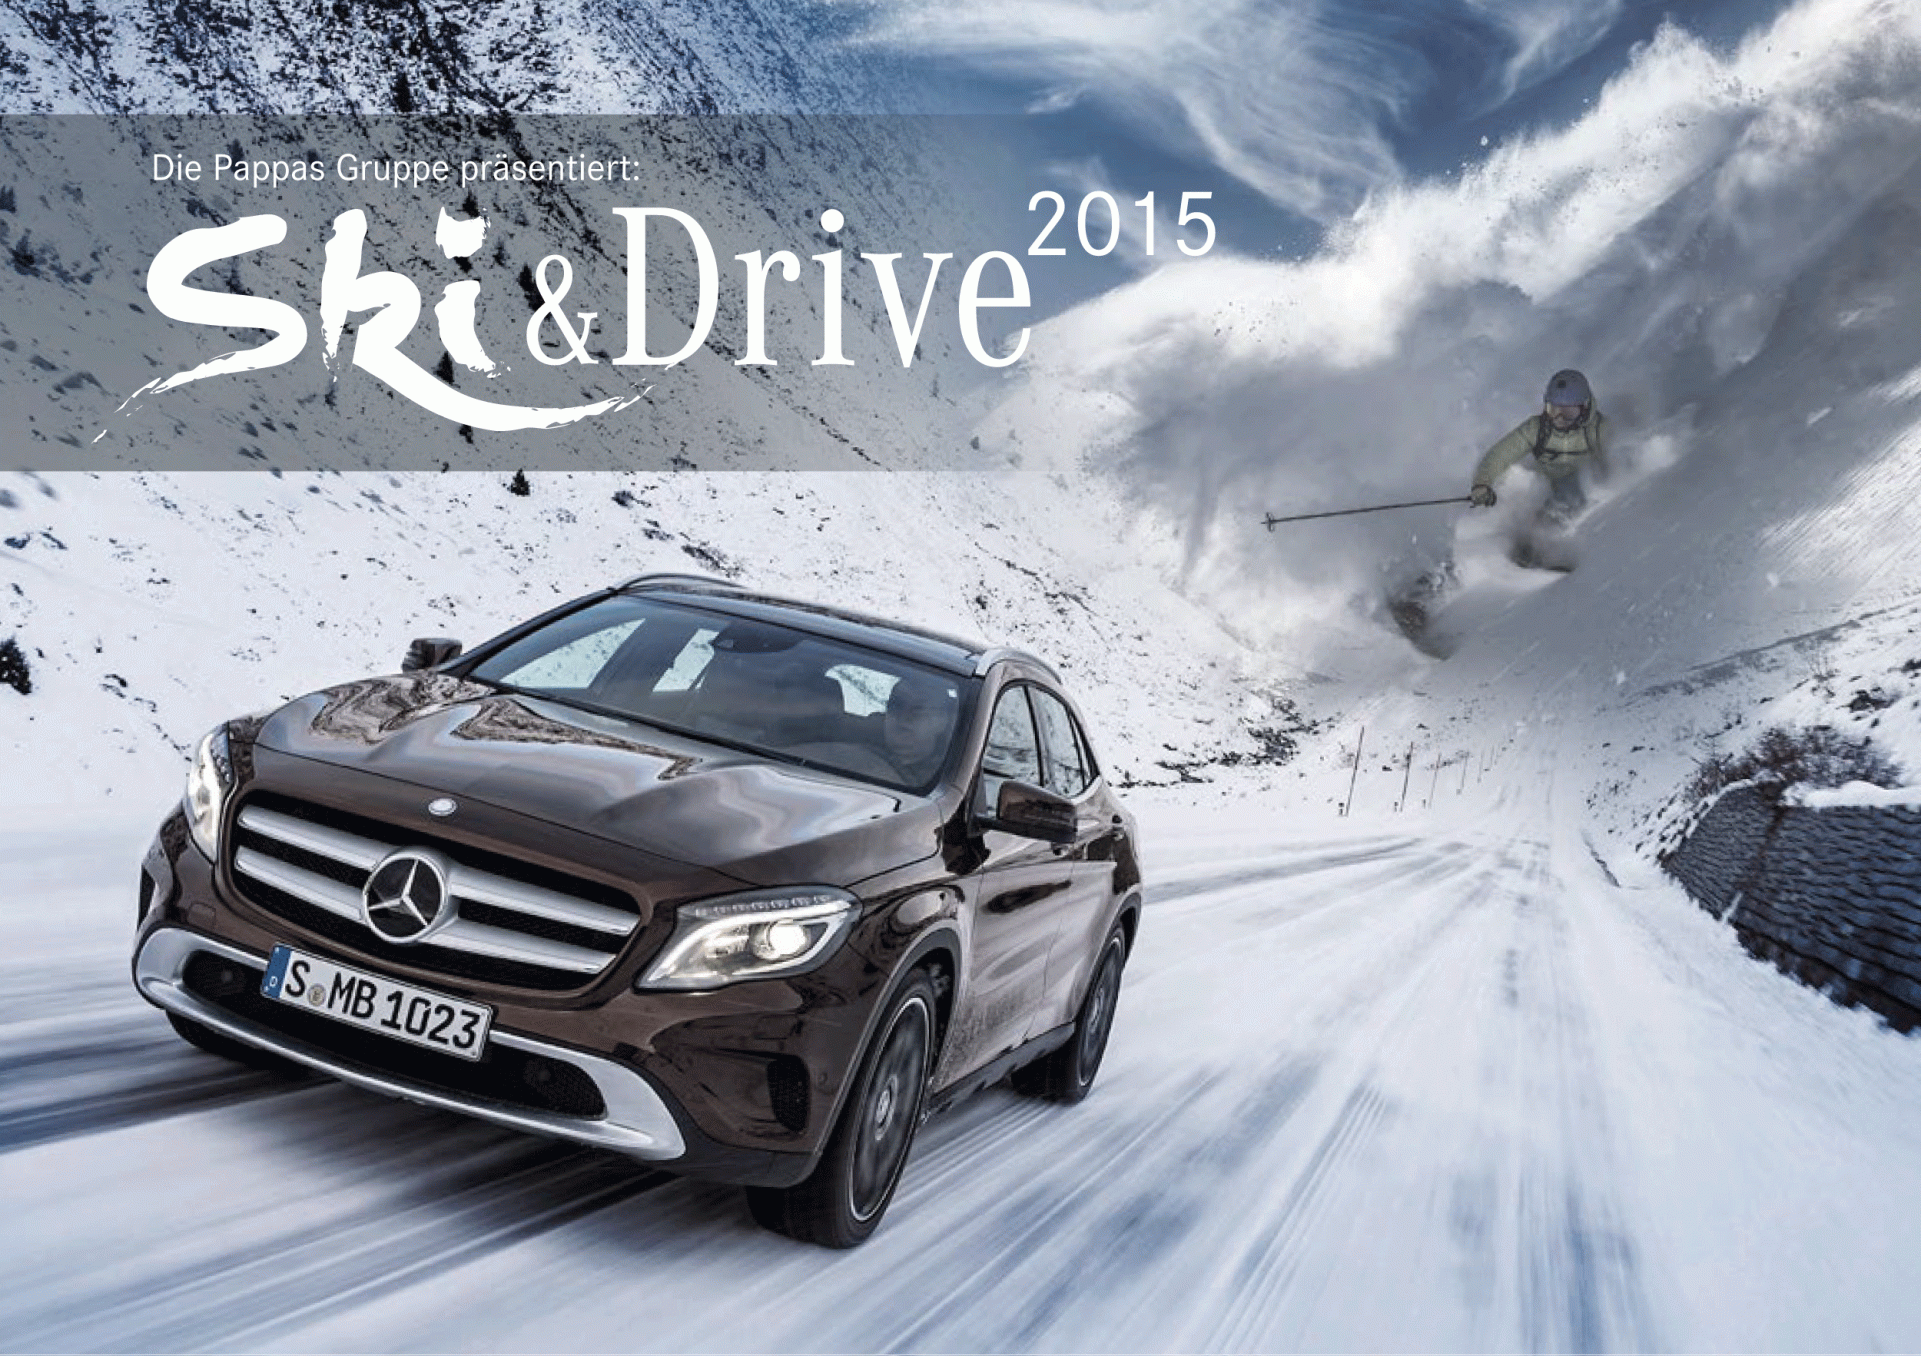 Ski & Drive Pitztal Pappas Gruppe Nordica Mercedes 4 Matic